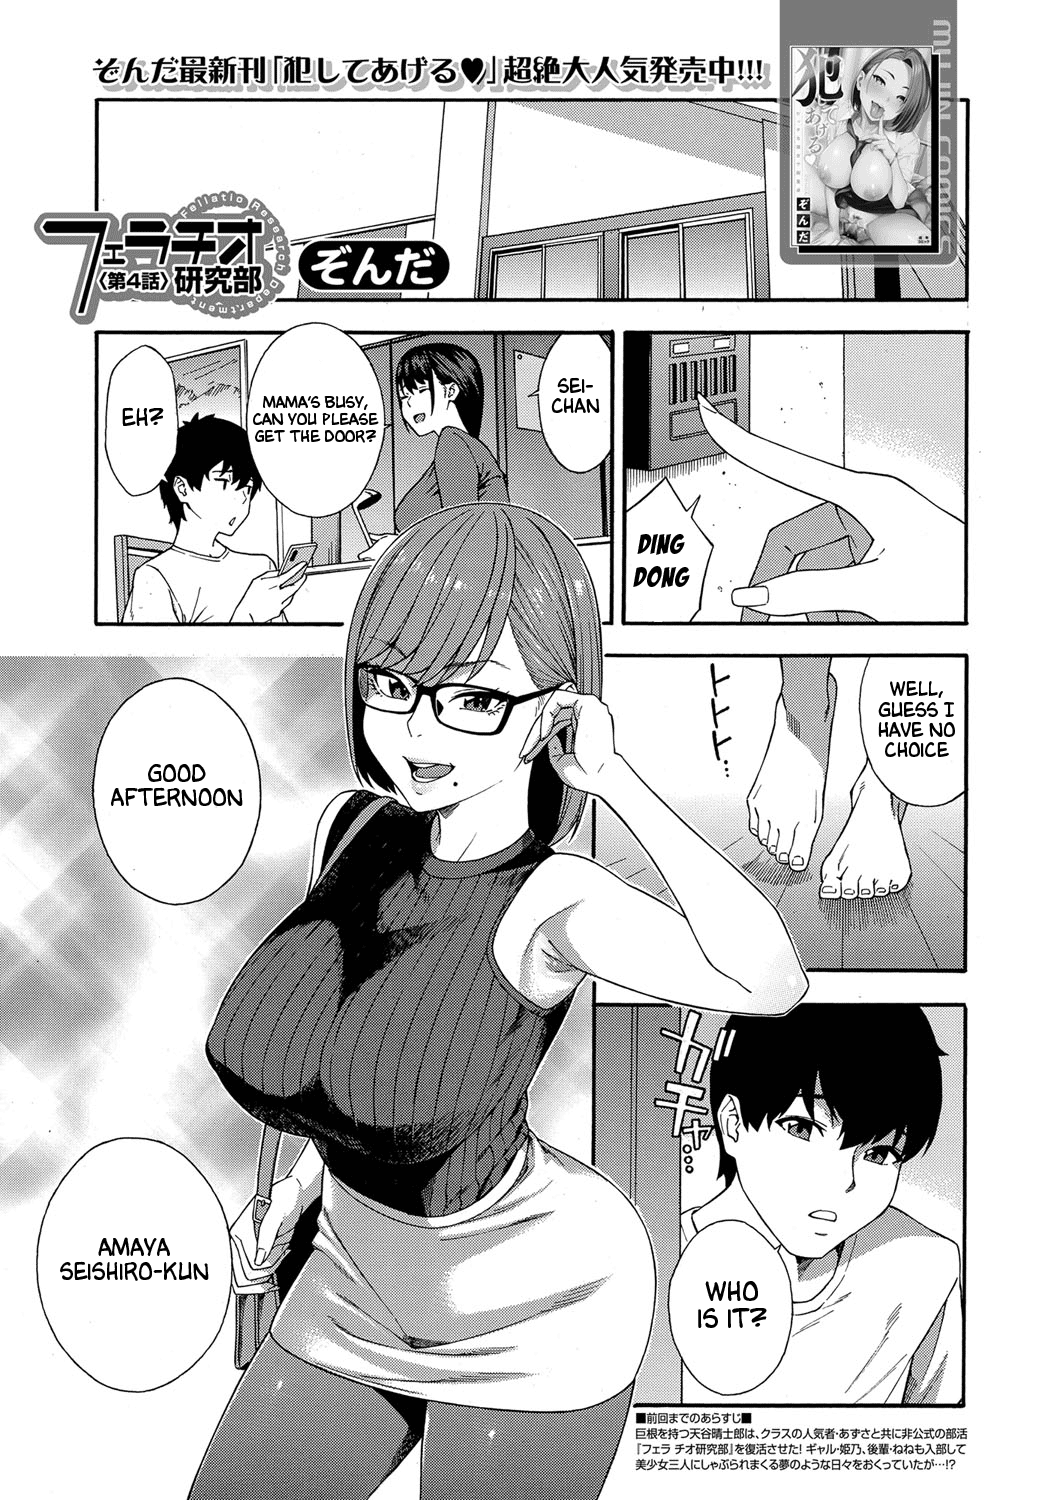 Hentai Manga Comic-Blowjob Research Club-Chapter 4-1